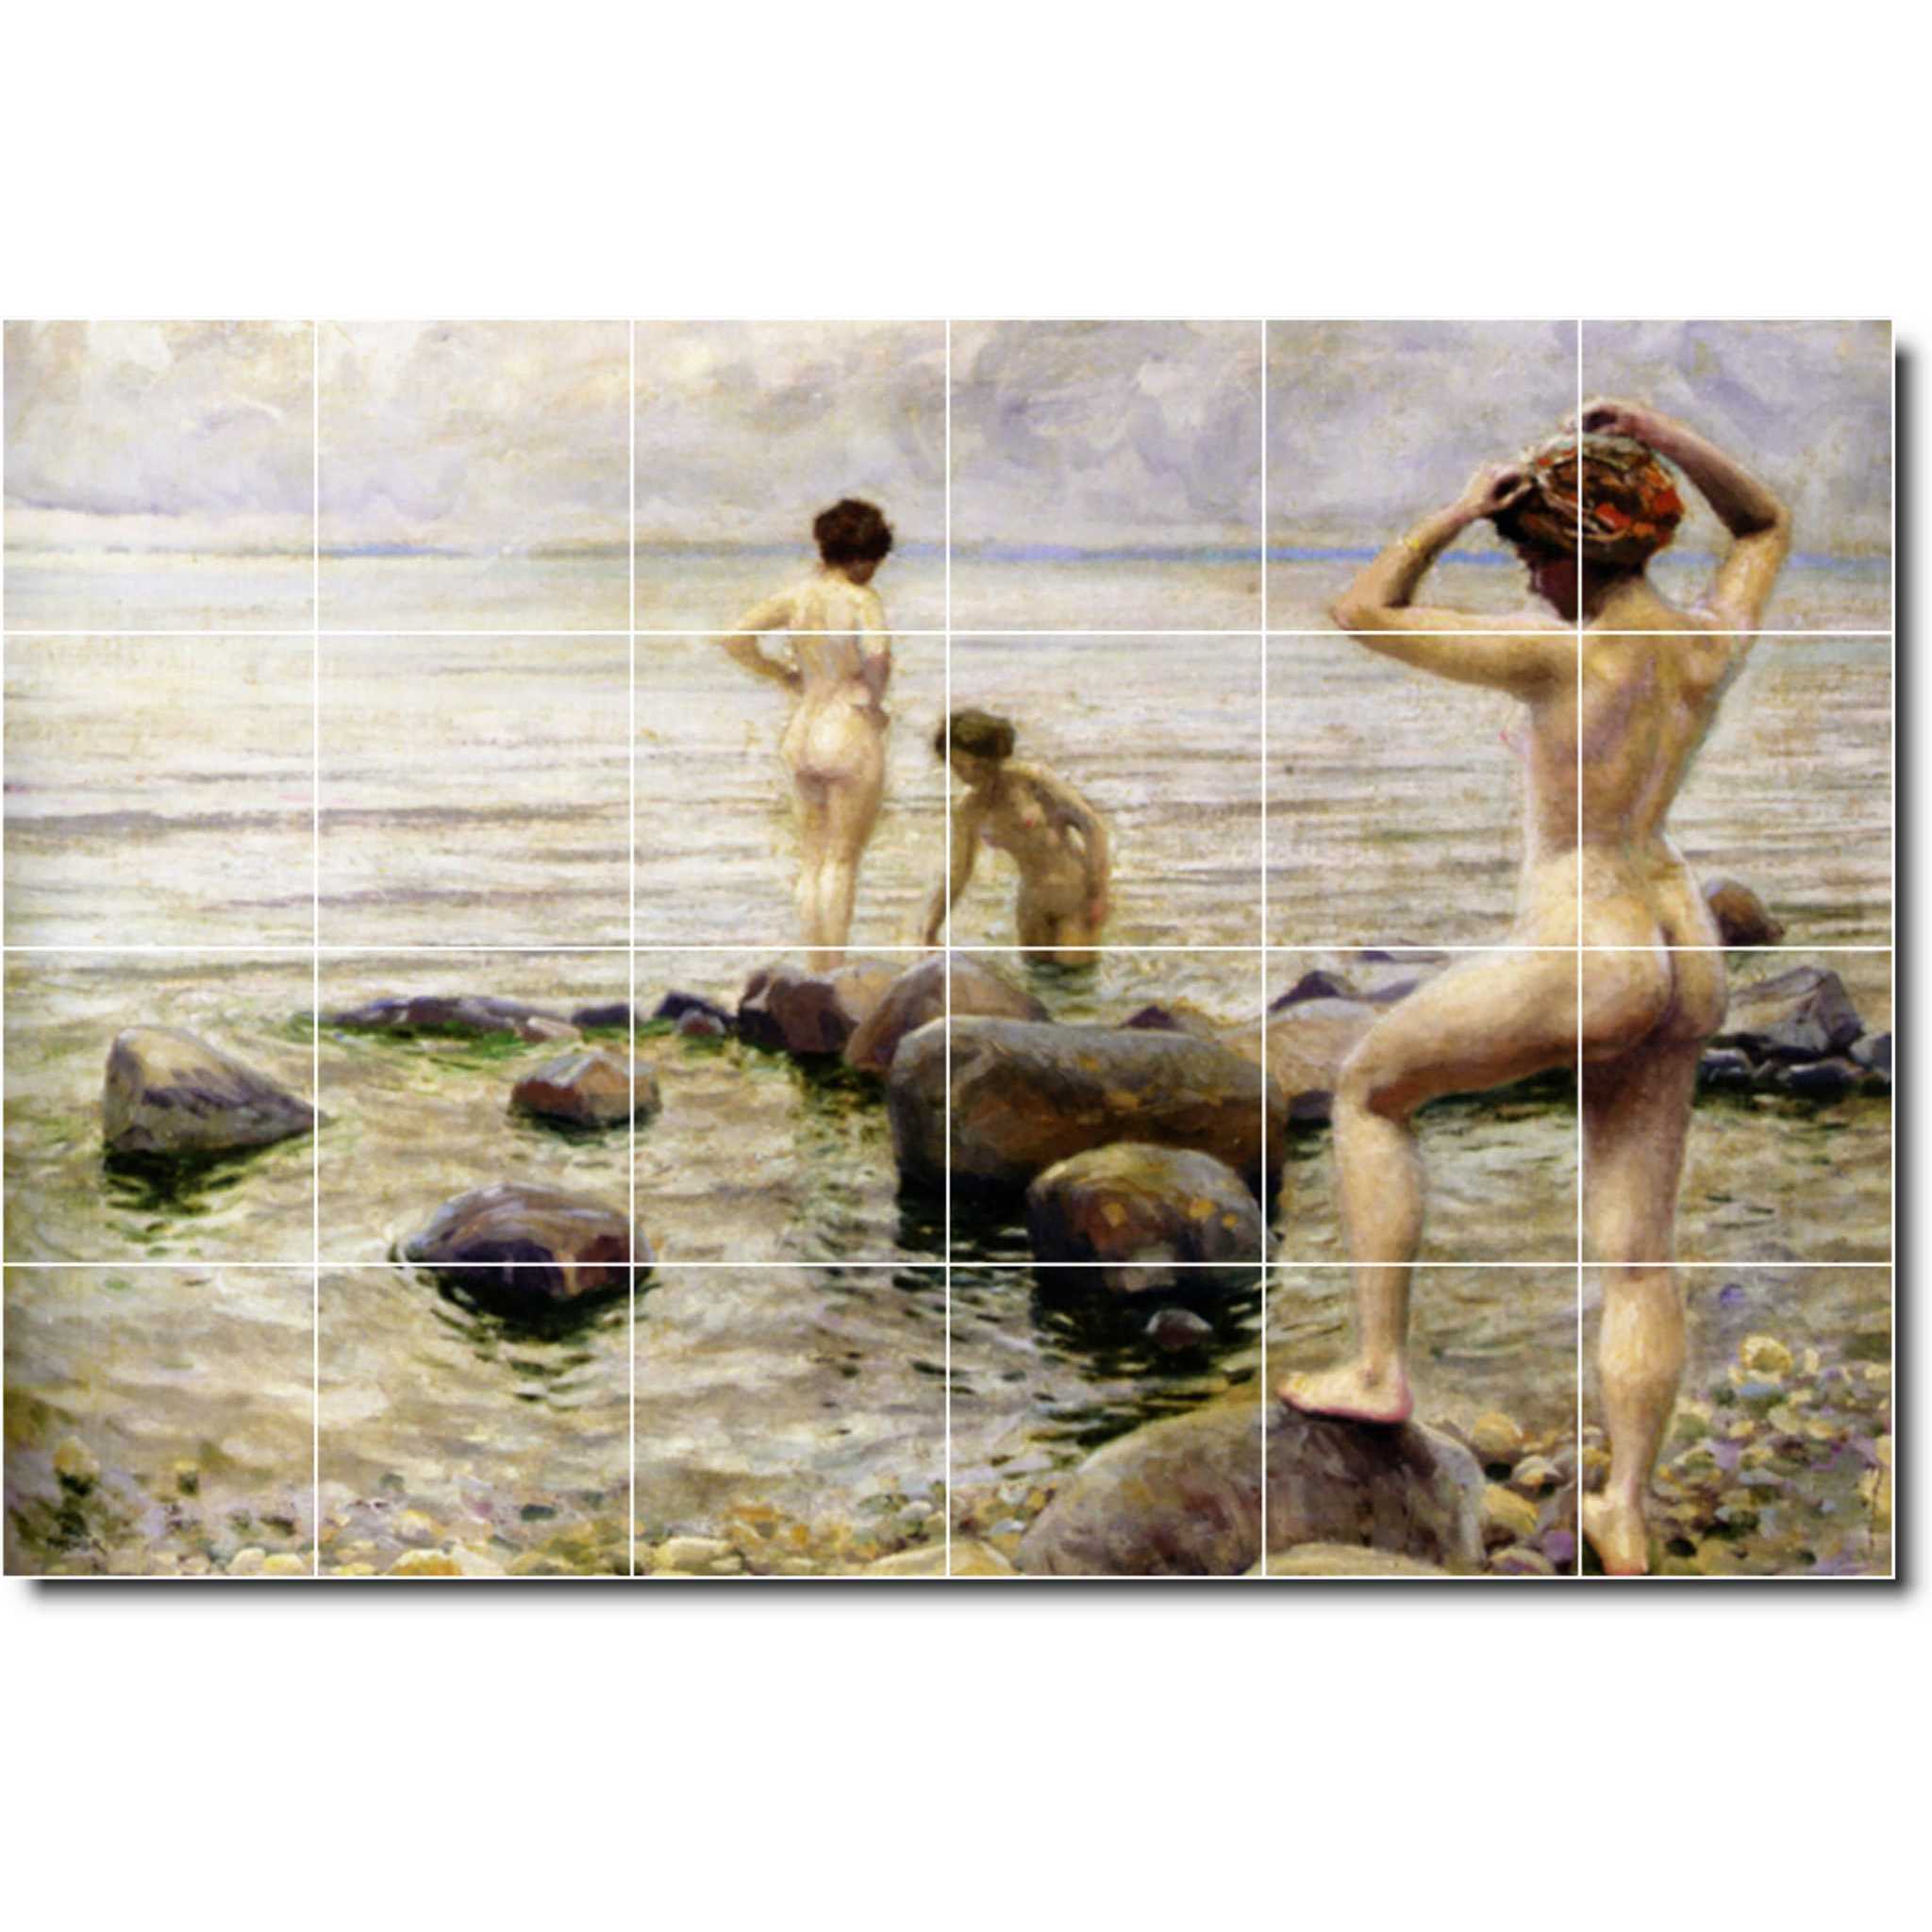 paul fischer nude painting ceramic tile mural p03272